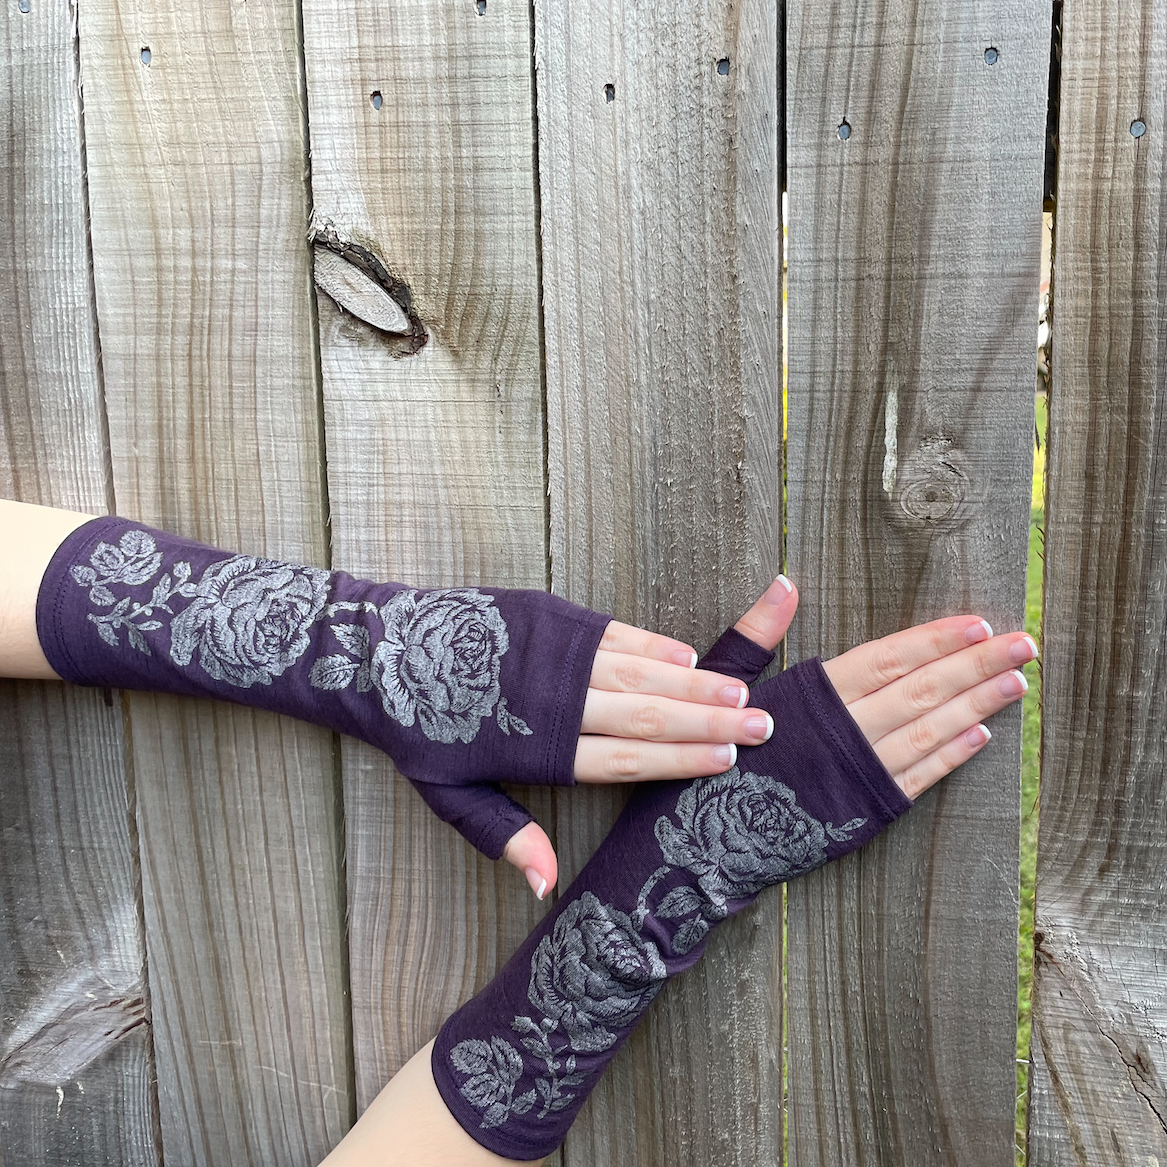 Fingerless merino gloves in purple with silver rose print.